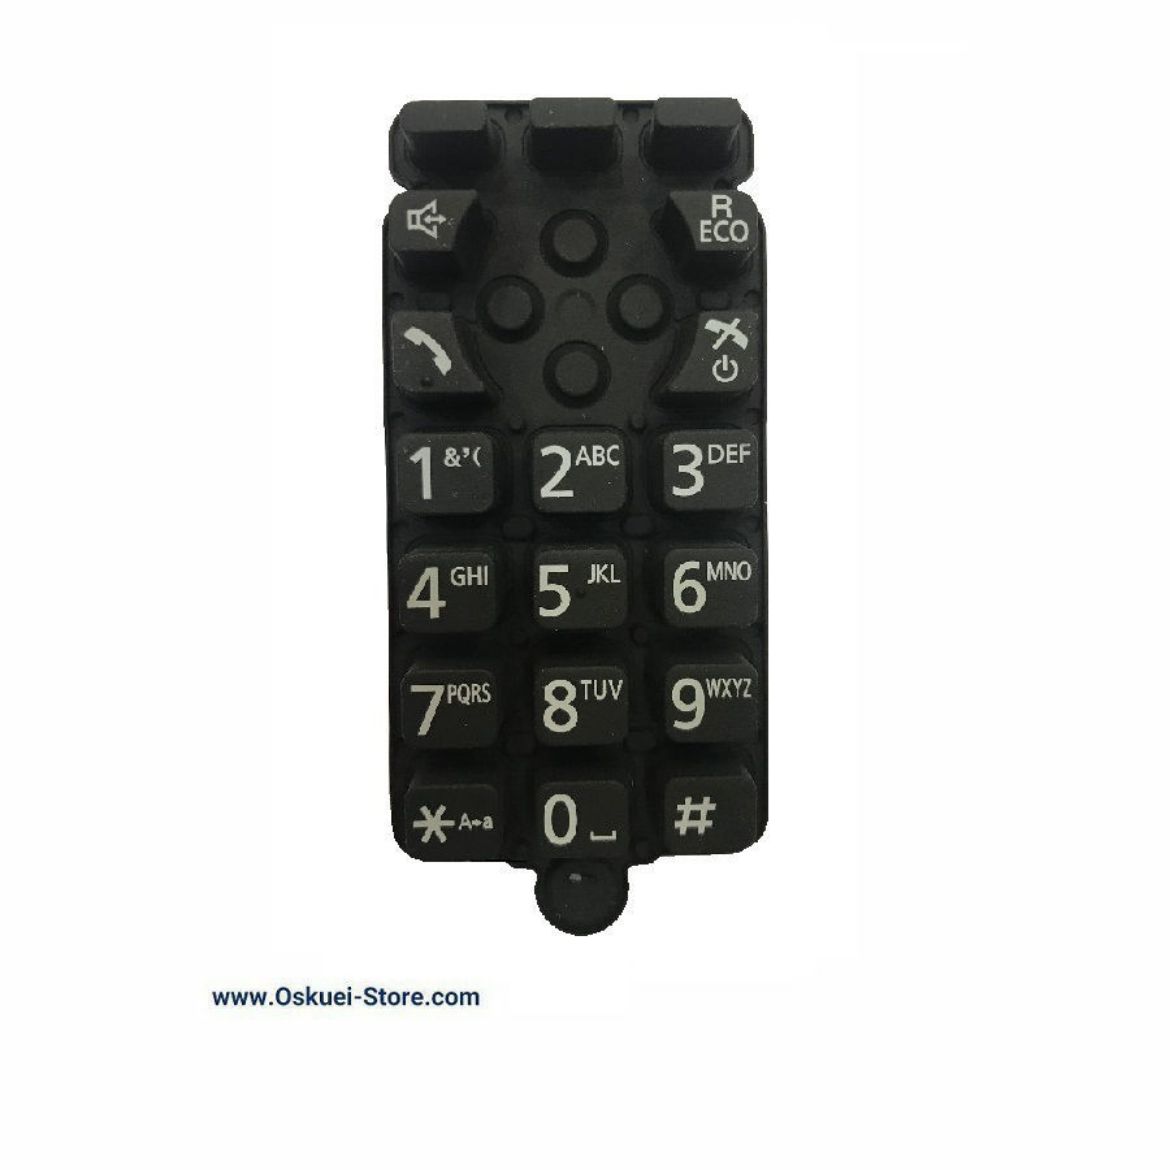 Panasonic Keypad For Panasonic KX-TG2711 Model Numbers